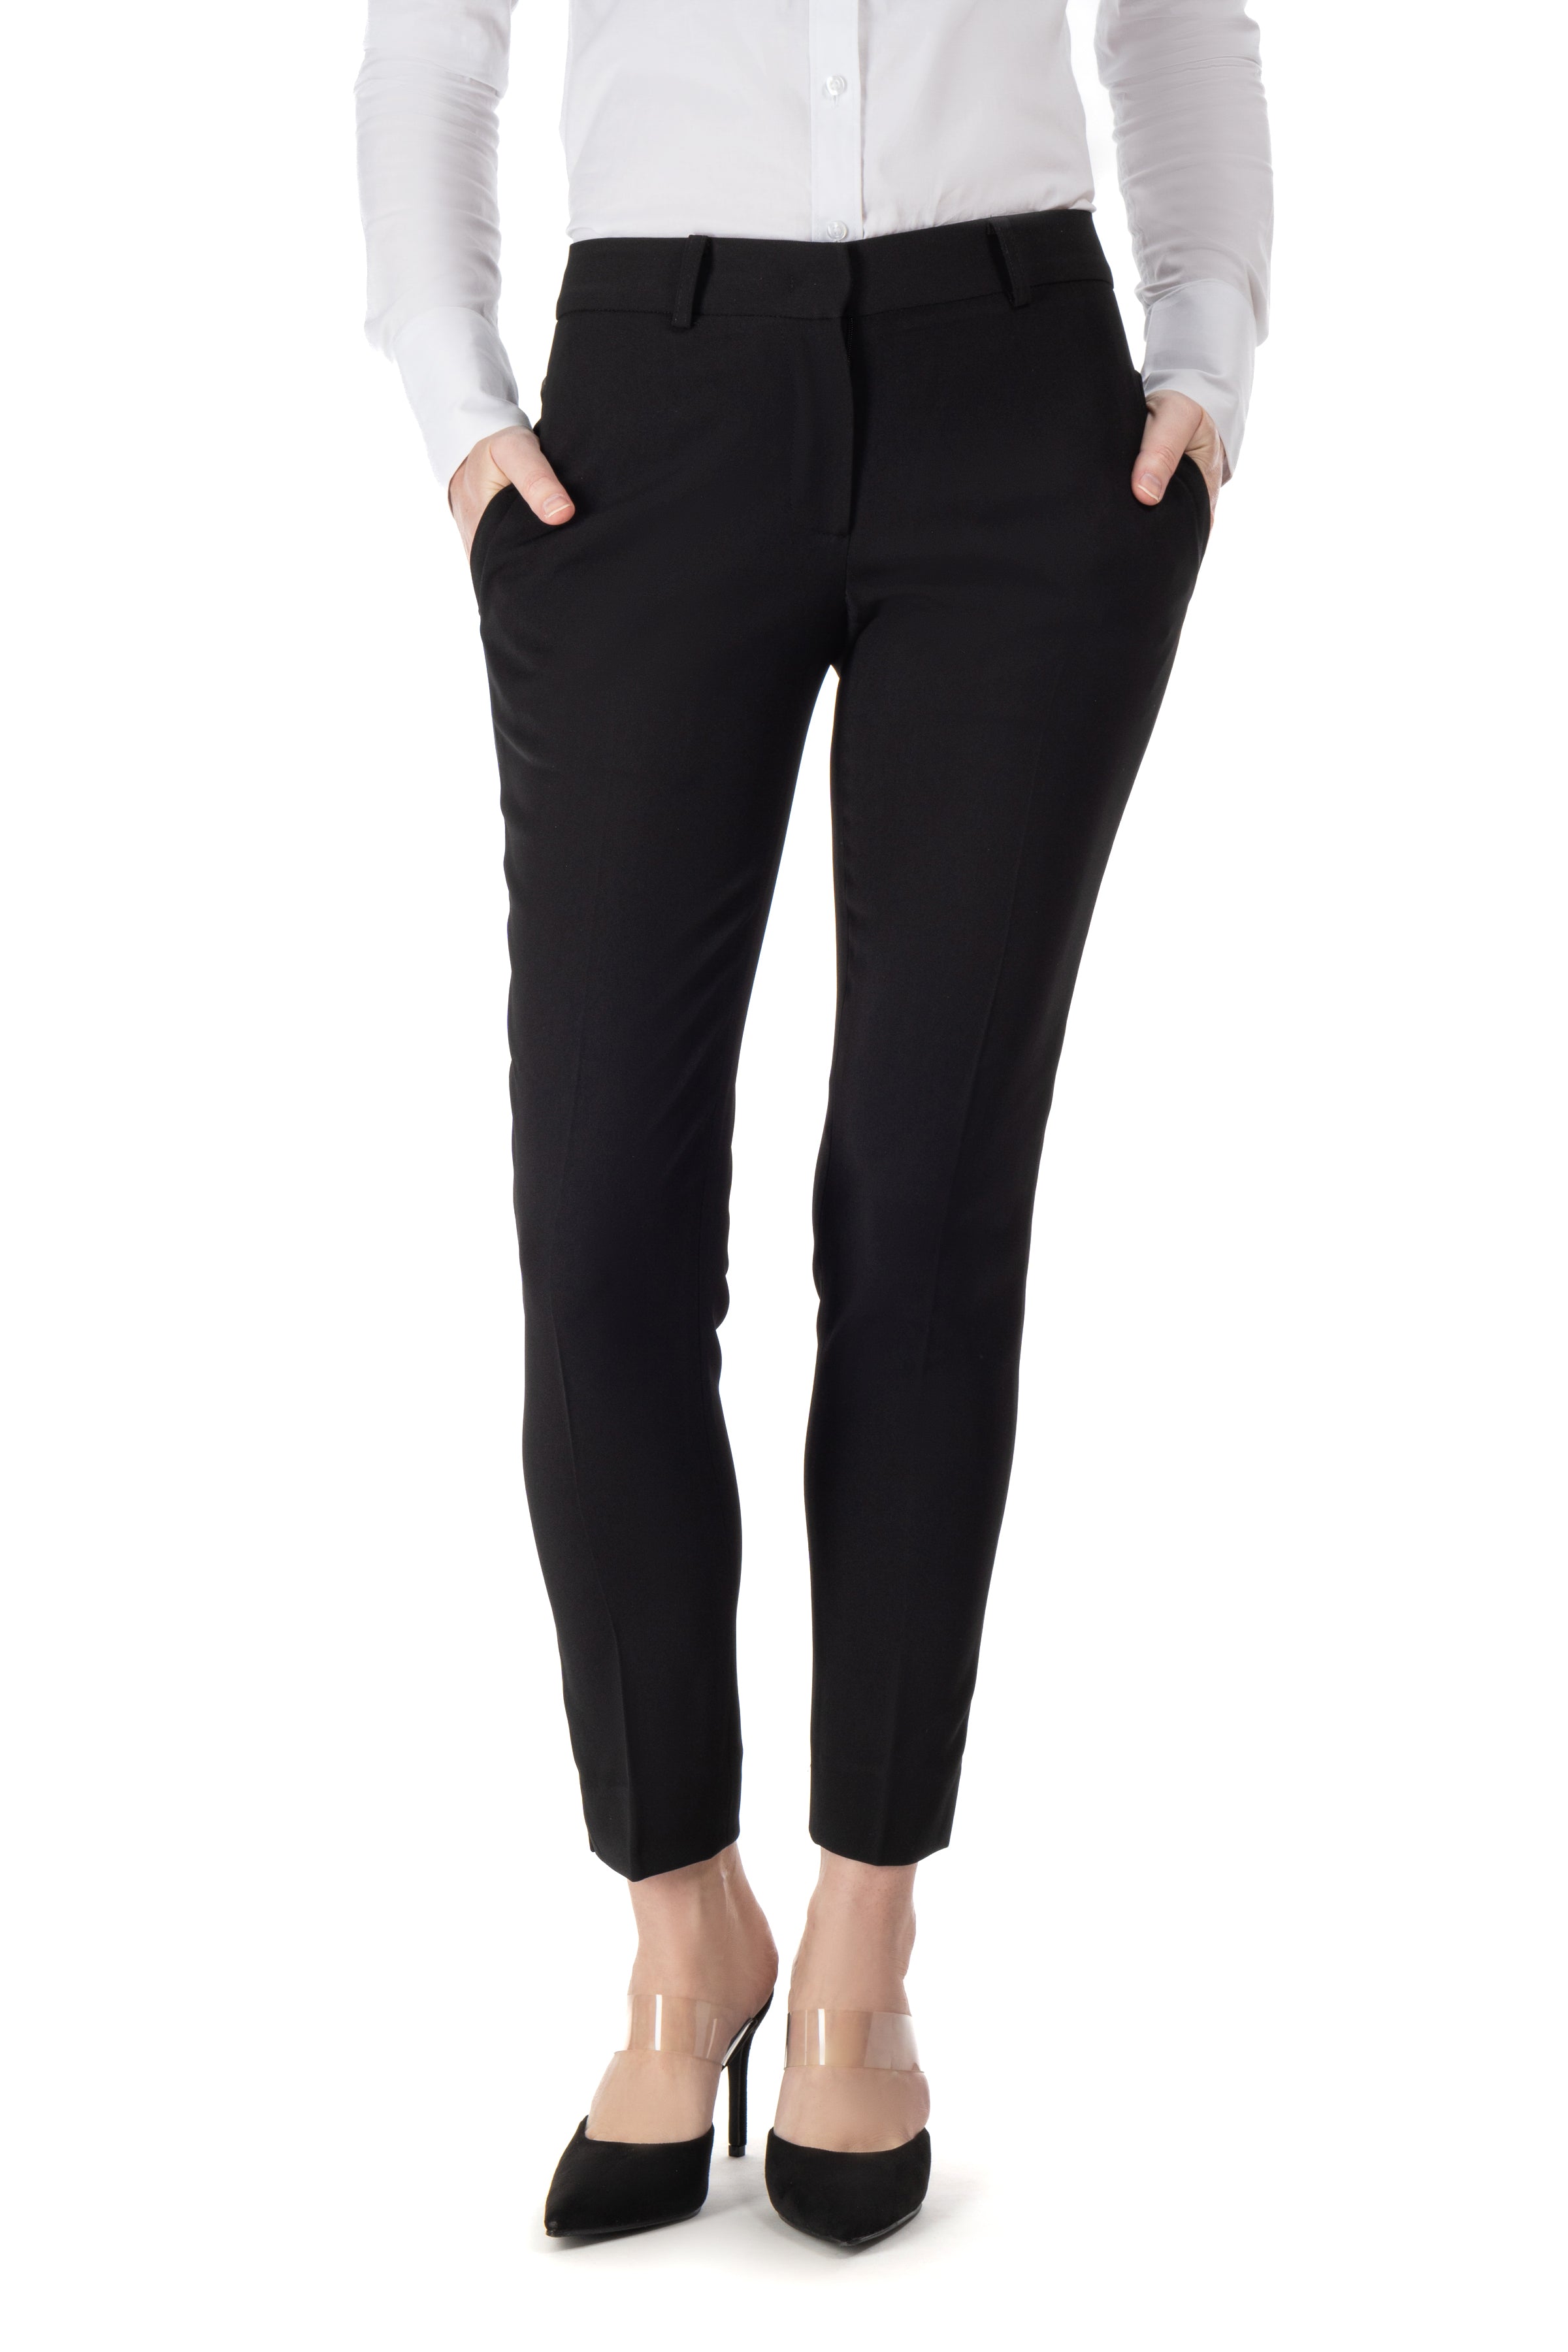 Black Slim Fit Tuxedo Pants for Women – LITTLE BLACK TUX